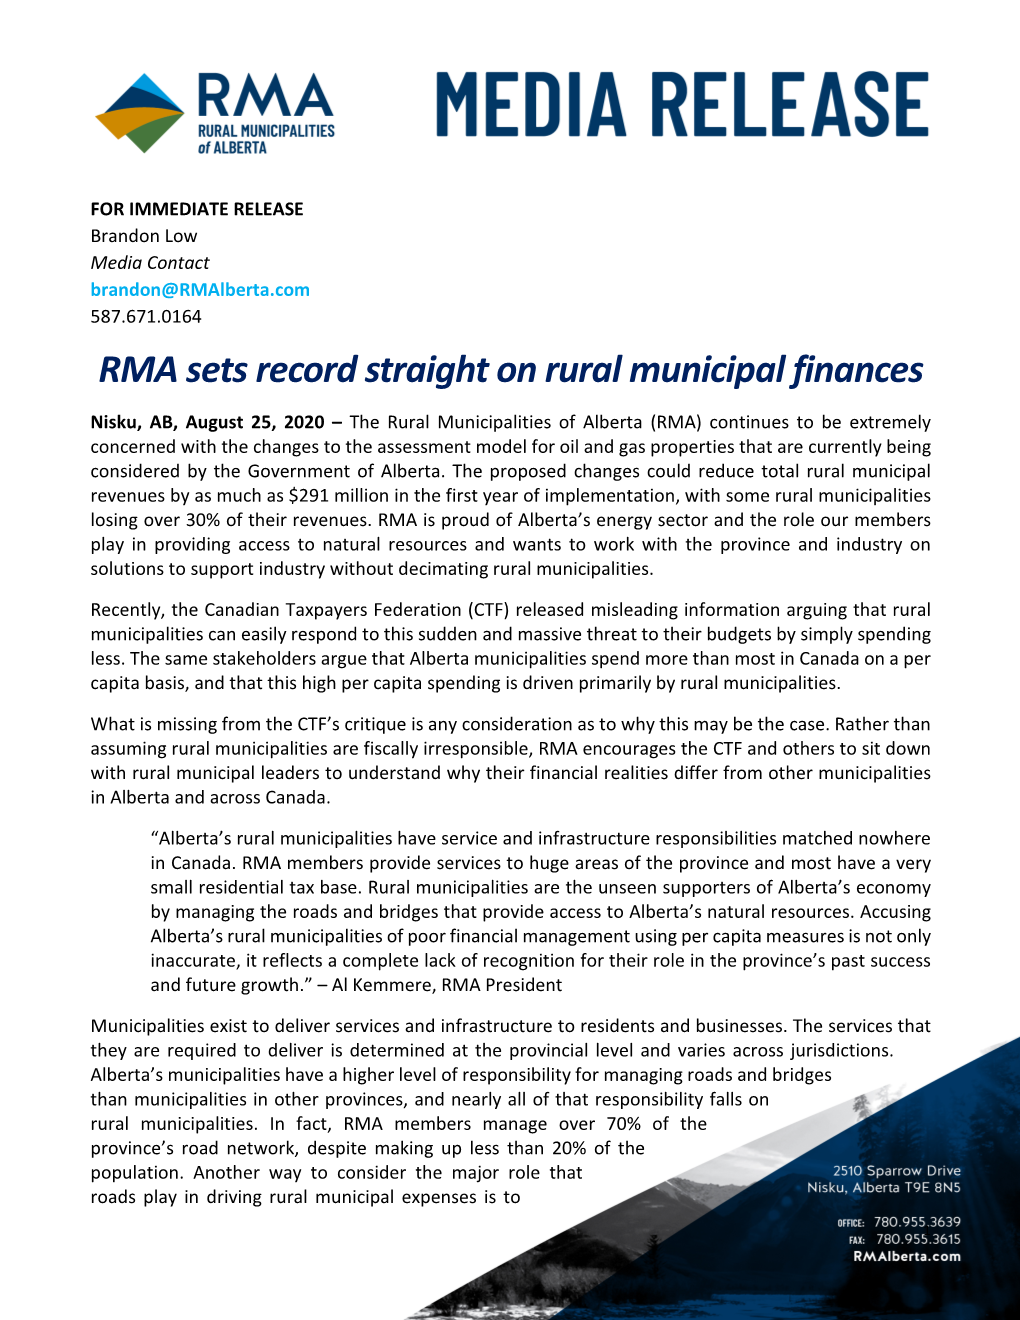 RMA Sets Record Straight on Rural Municipal Finances